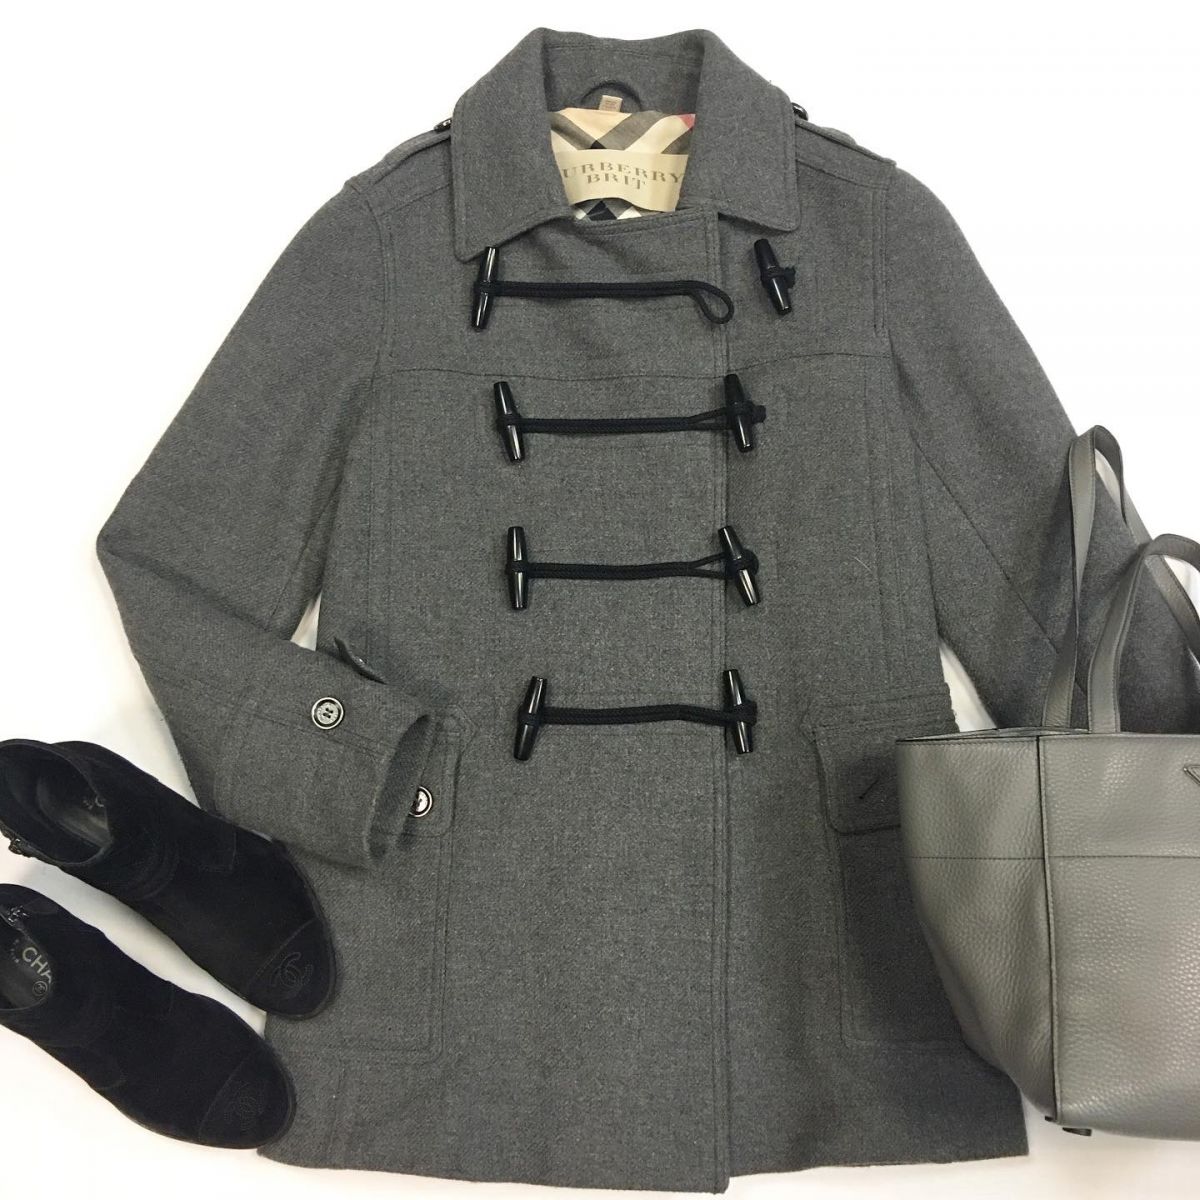 Пальто Burberry  размер 44 цена 15 385 руб Ботинки Chanel  размер 39.5 цена 13 847 руб Сумка Prada